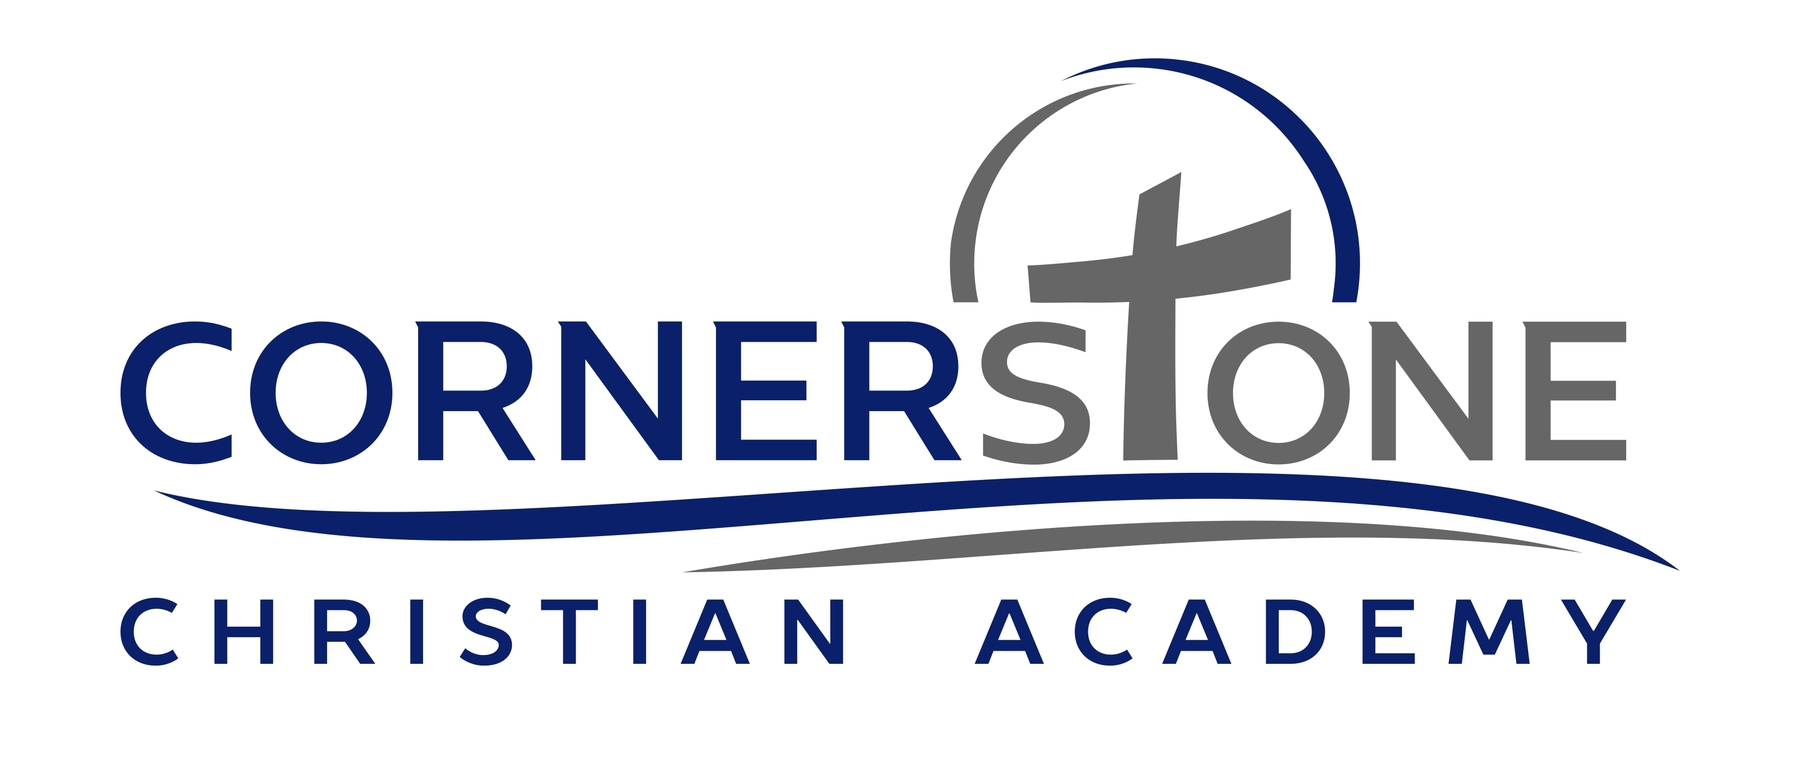 Cornerstone Christian Academy - Admissions Online